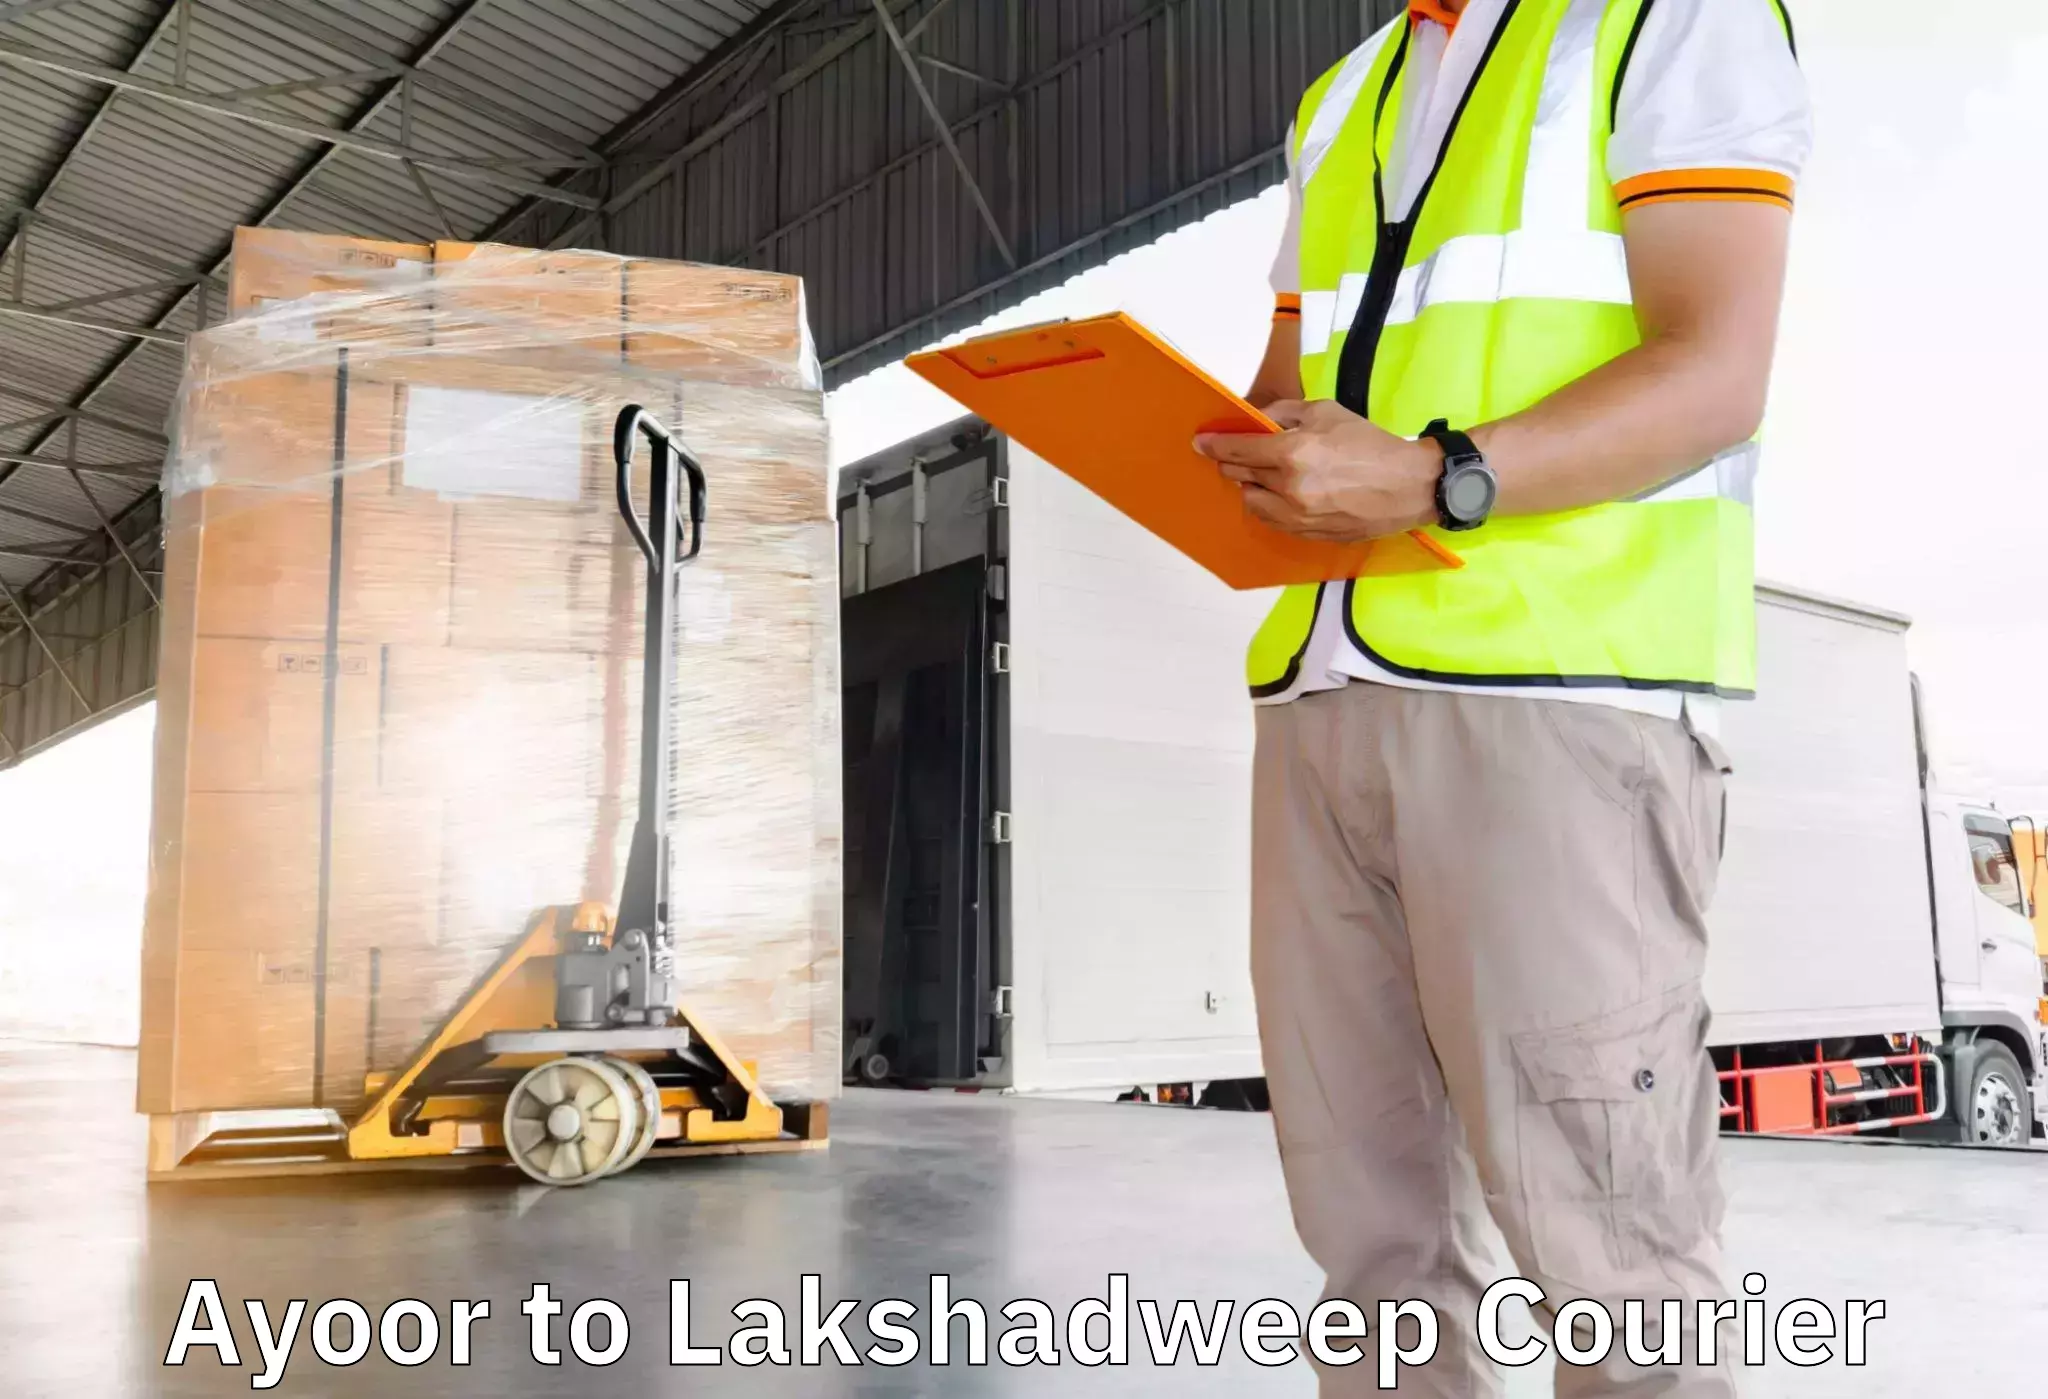 Efficient moving company Ayoor to Lakshadweep